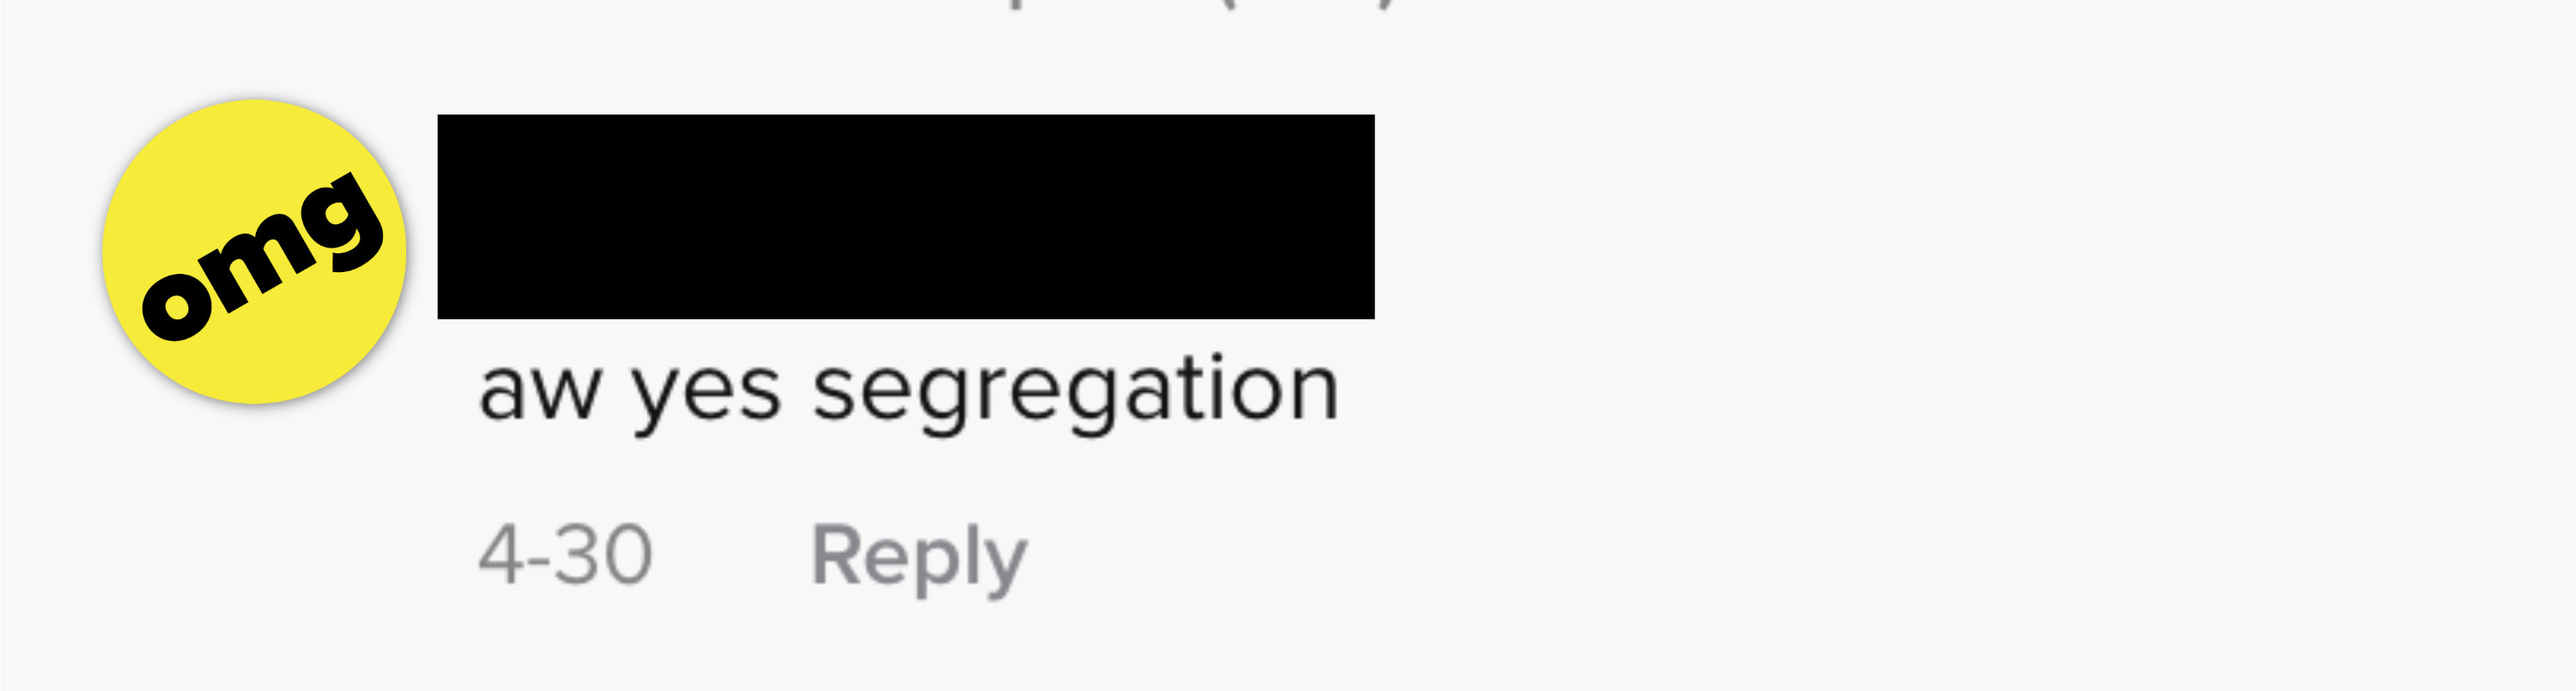 aw yes segregation